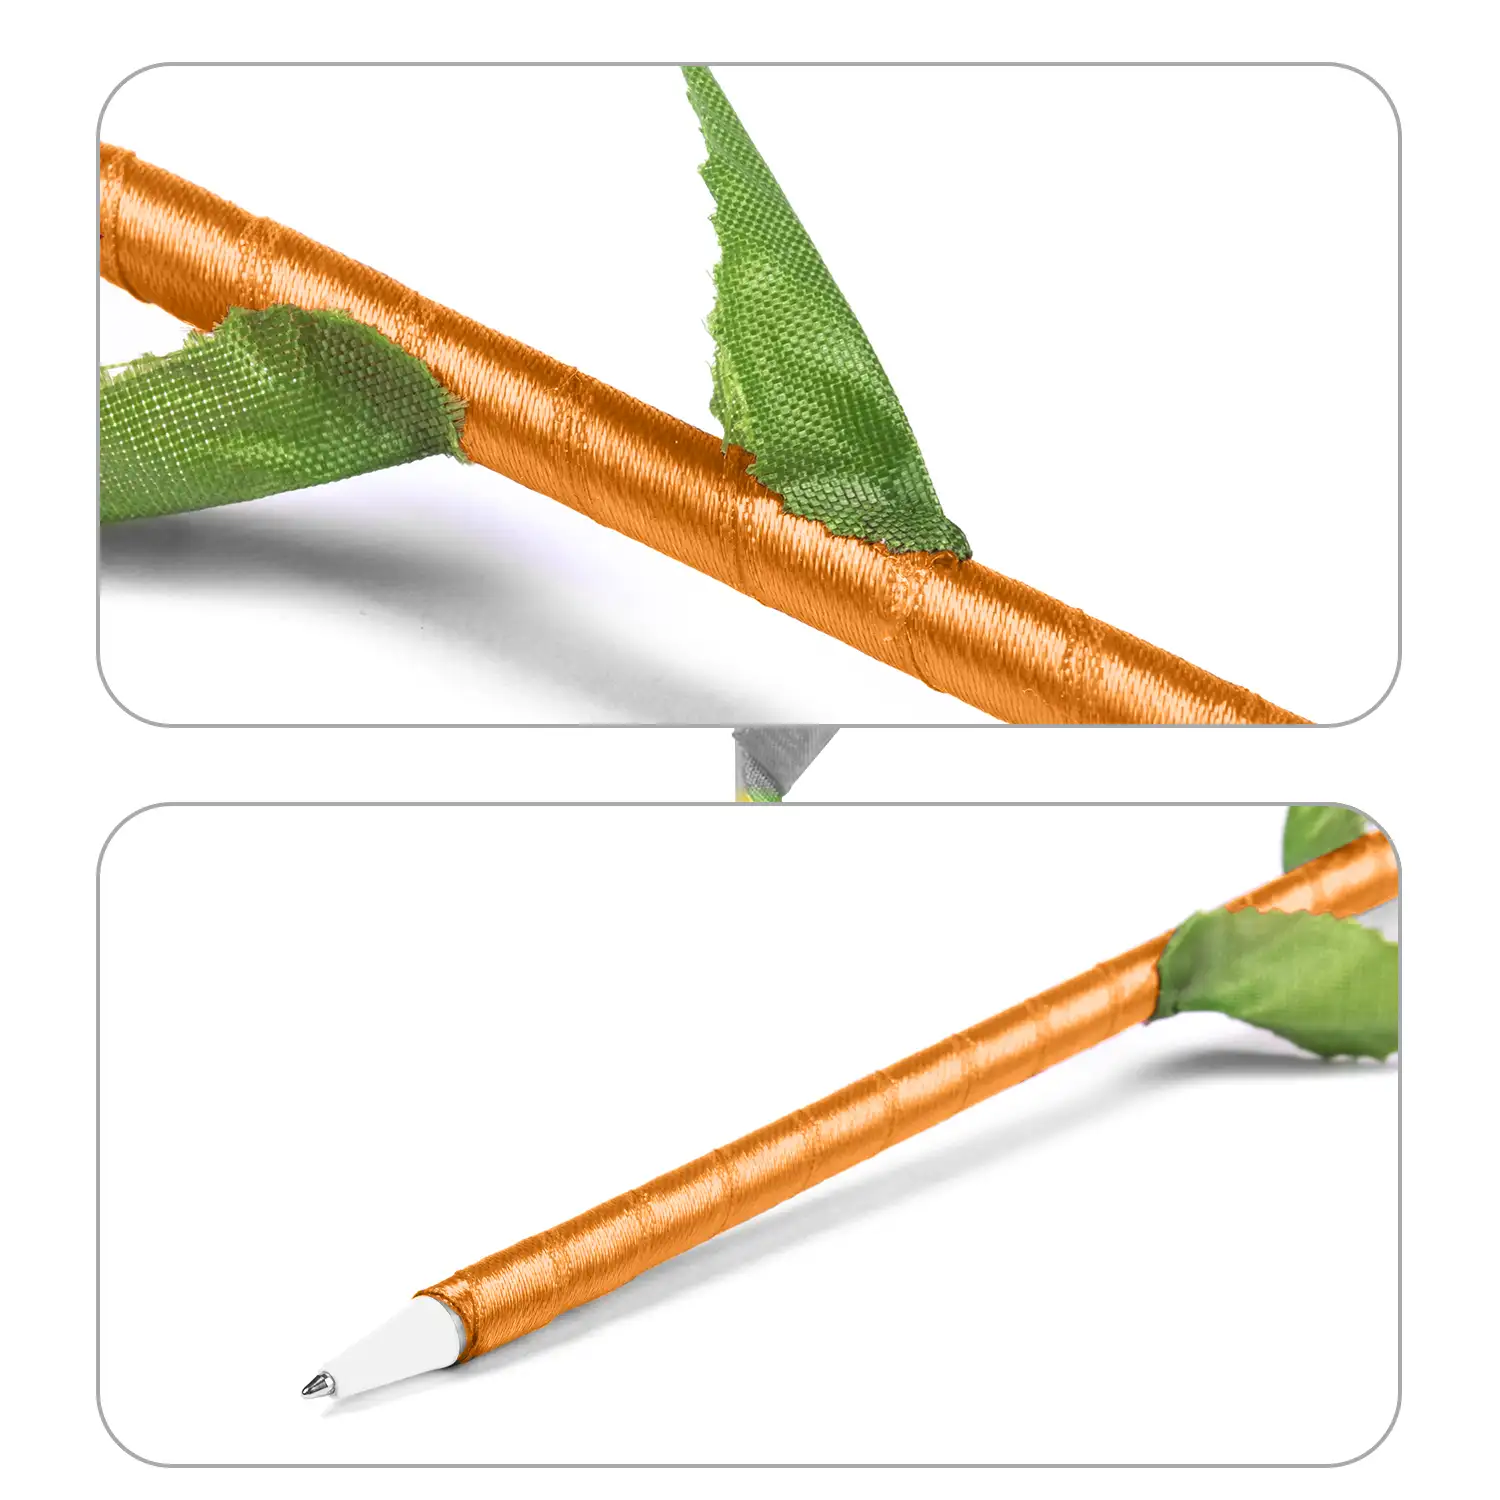 Bolígrafo Ximor con forma de naranja y capucha a juego. Con tinta negra.